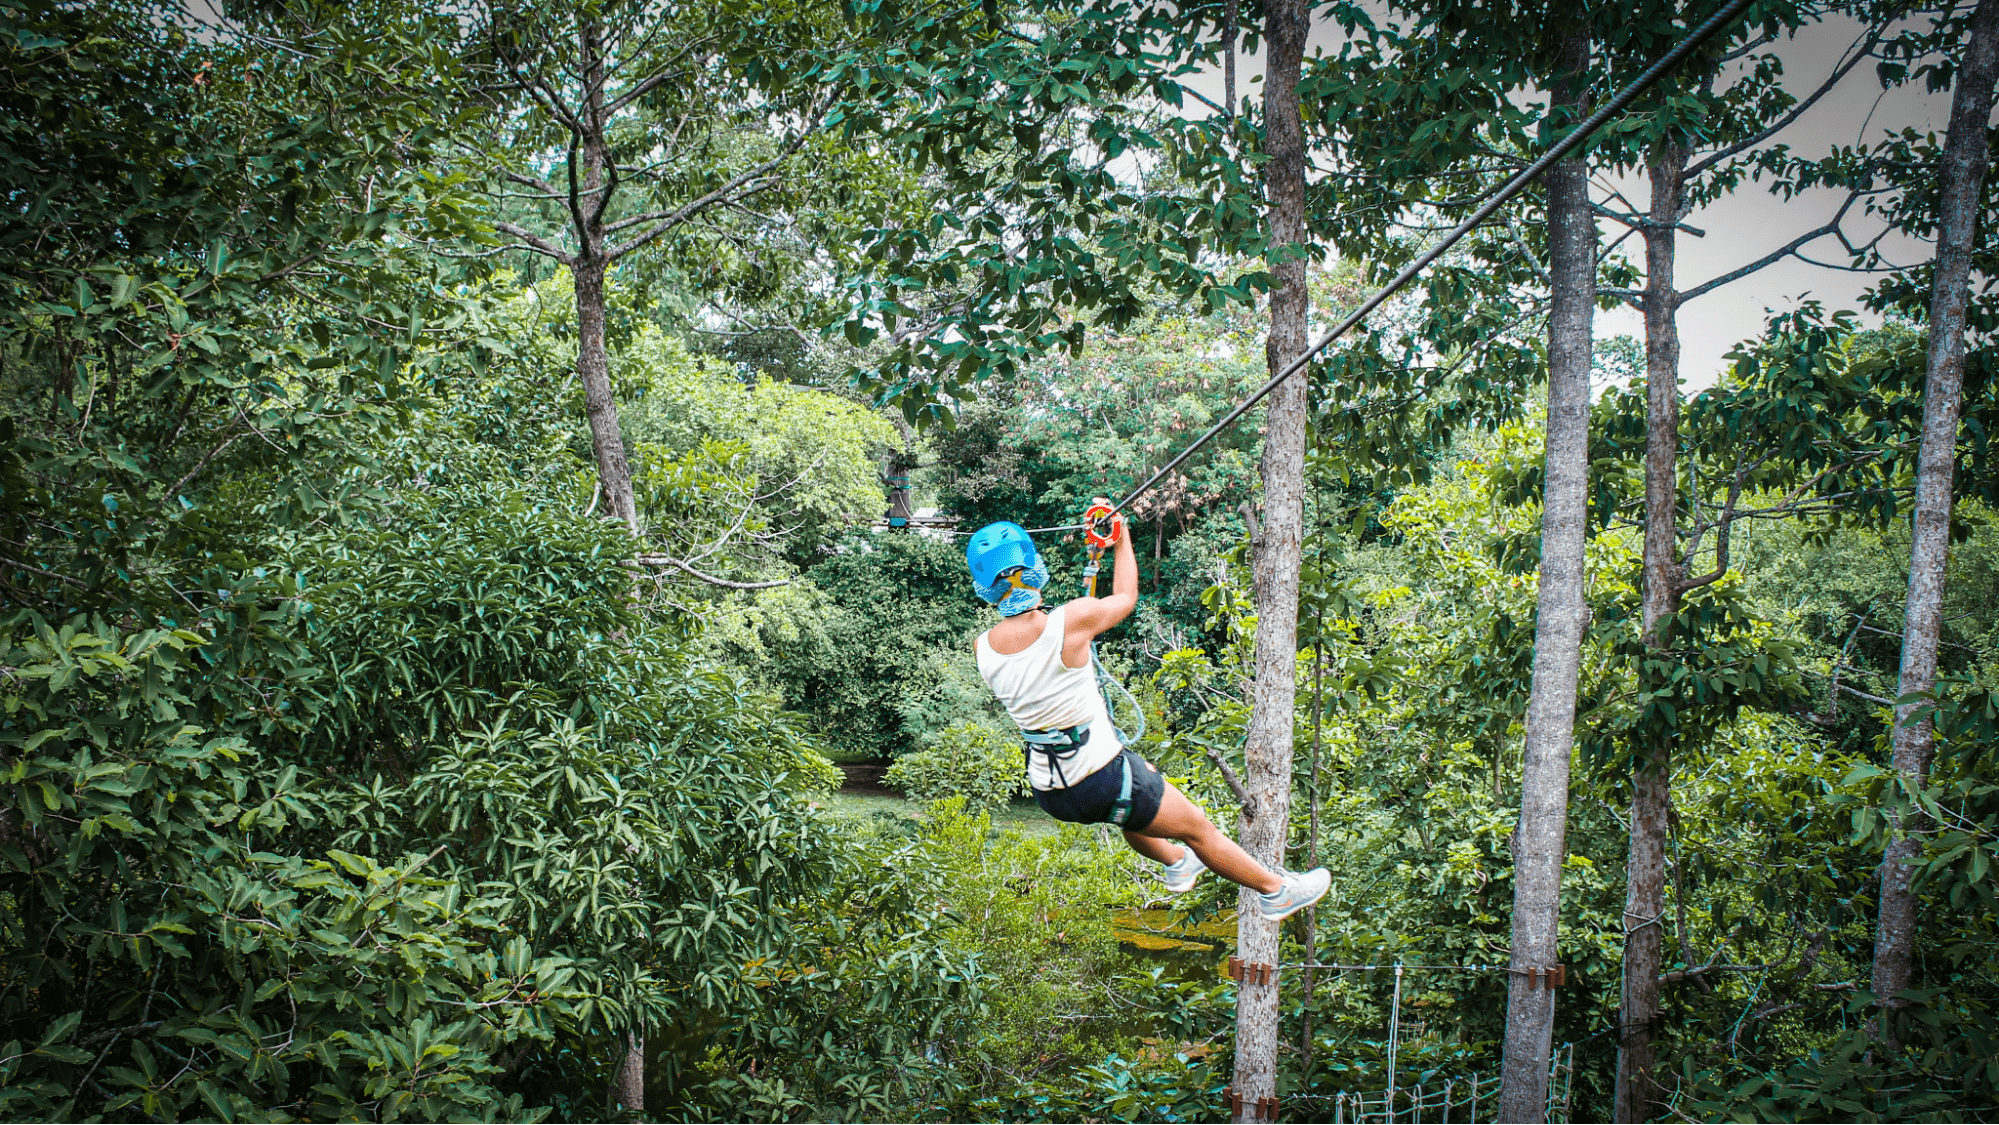 things to do near bangkok - Tree Top Adventure Park